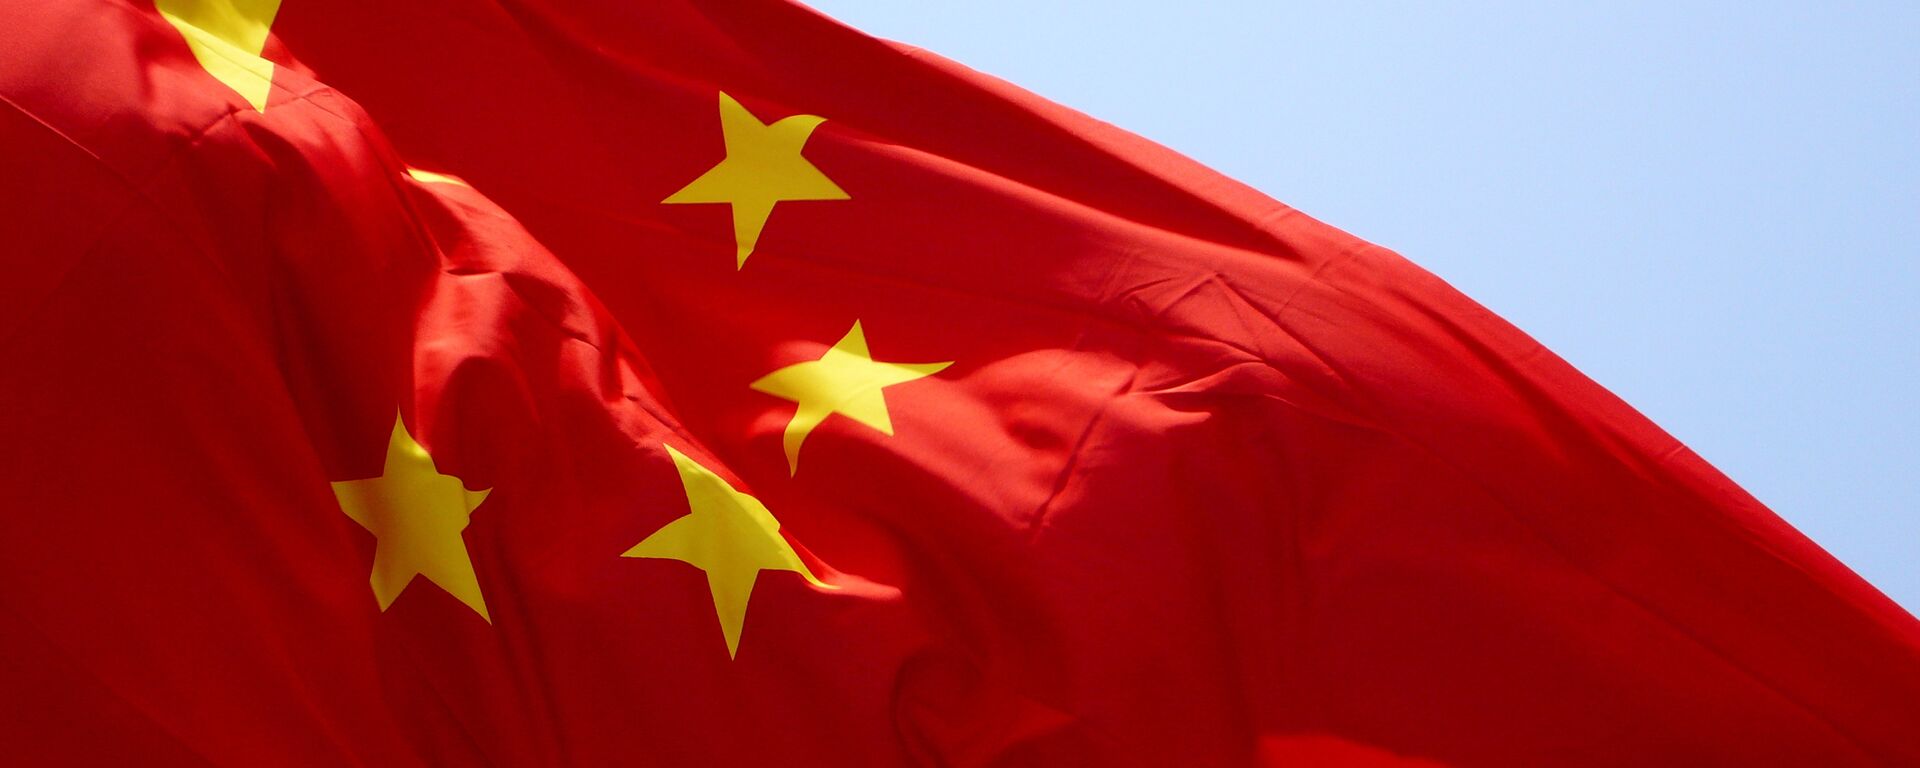 Bandera de China - Sputnik Mundo, 1920, 23.07.2021